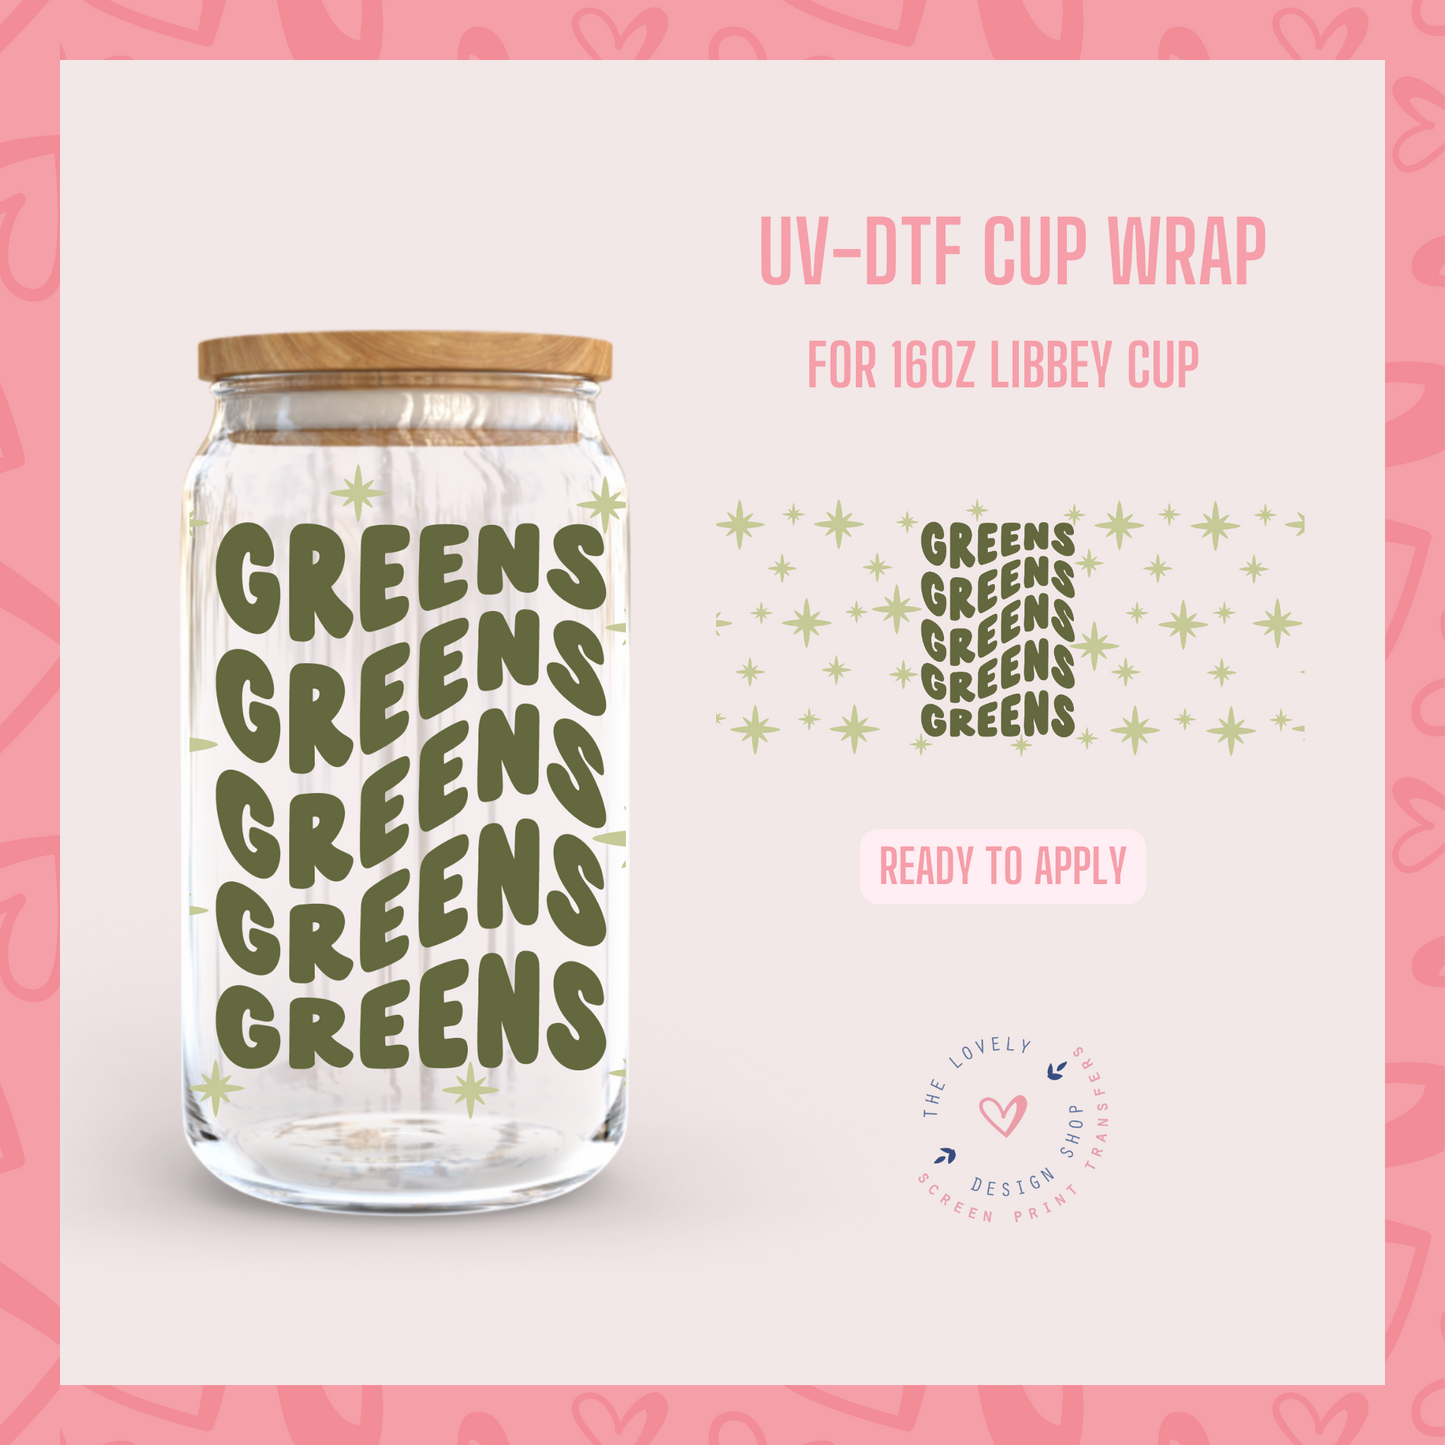 Greens x5 - UV DTF 16 oz Libbey Cup Wrap (Ready to Ship) Mar 26